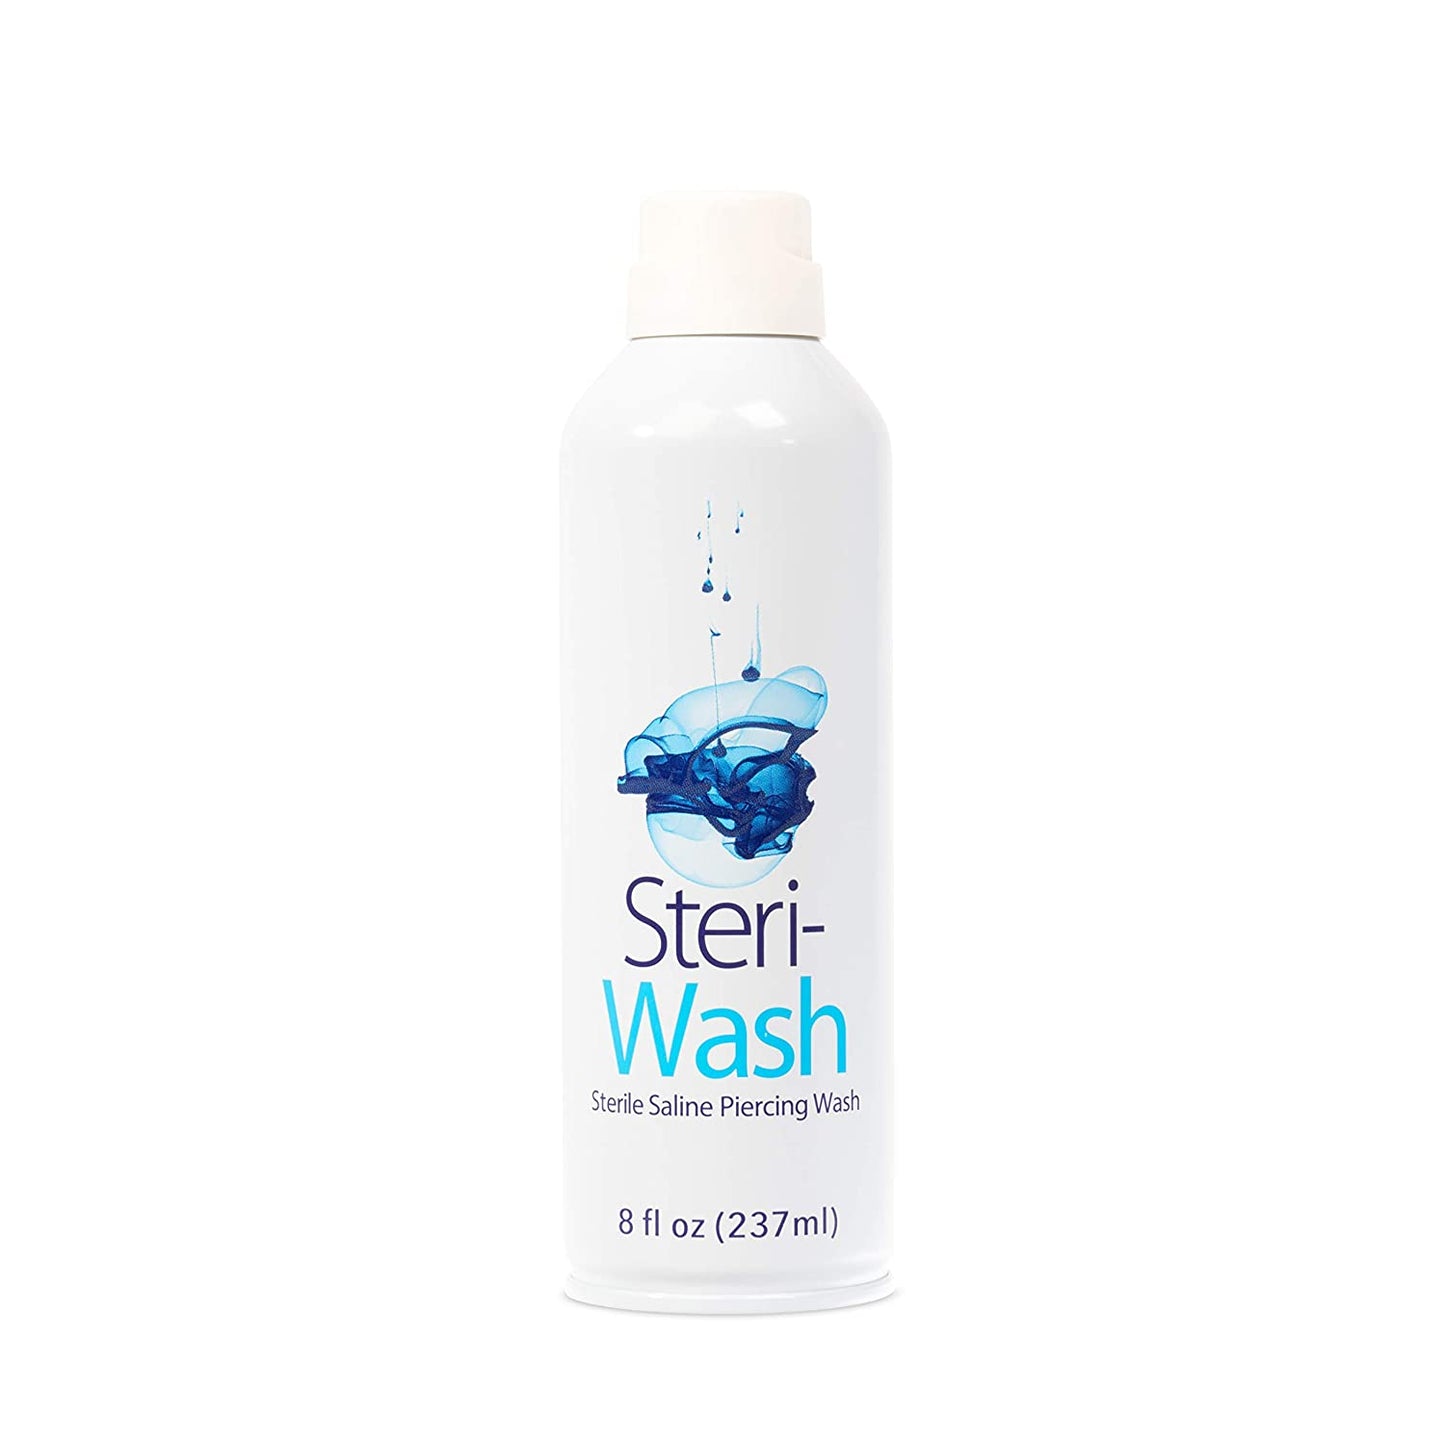 Steri-Wash Sterile Saline Piercing Wash 8 oz spray | Bev Sidders Skincare